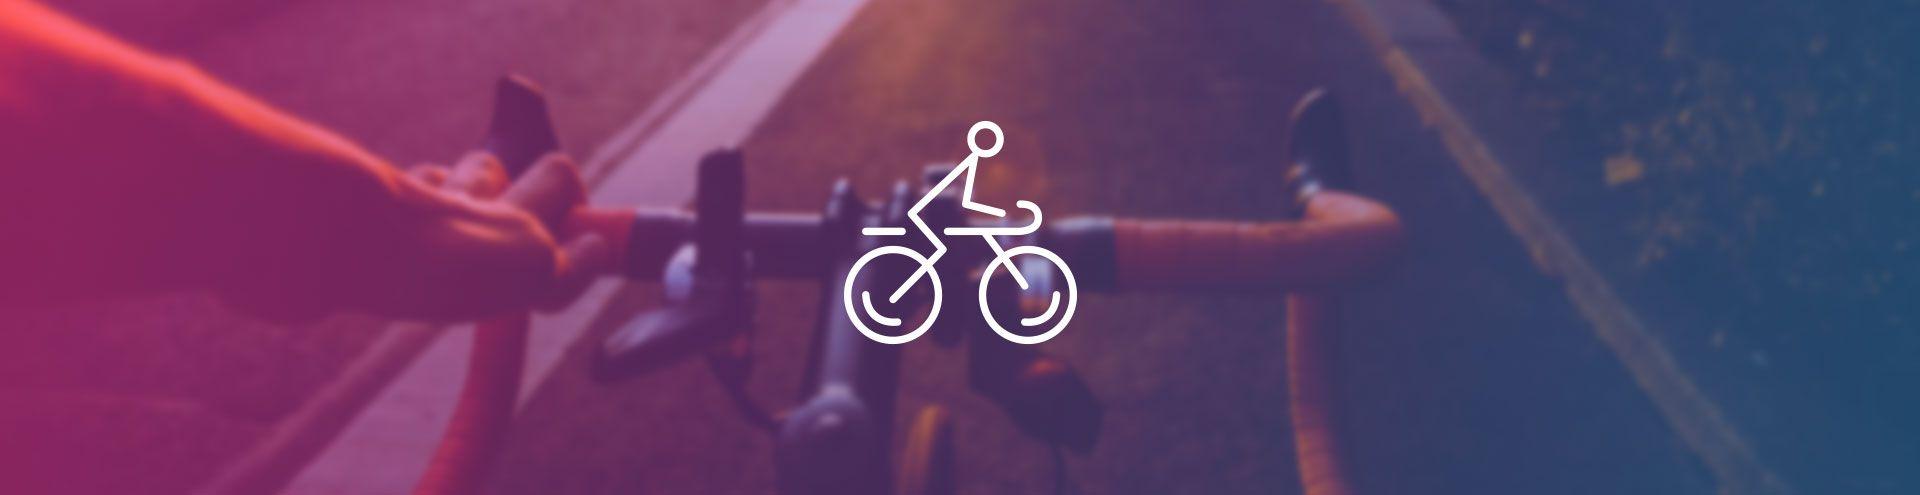 Peer To Peer Bike Sharing Marketplace: How To Make It Successful